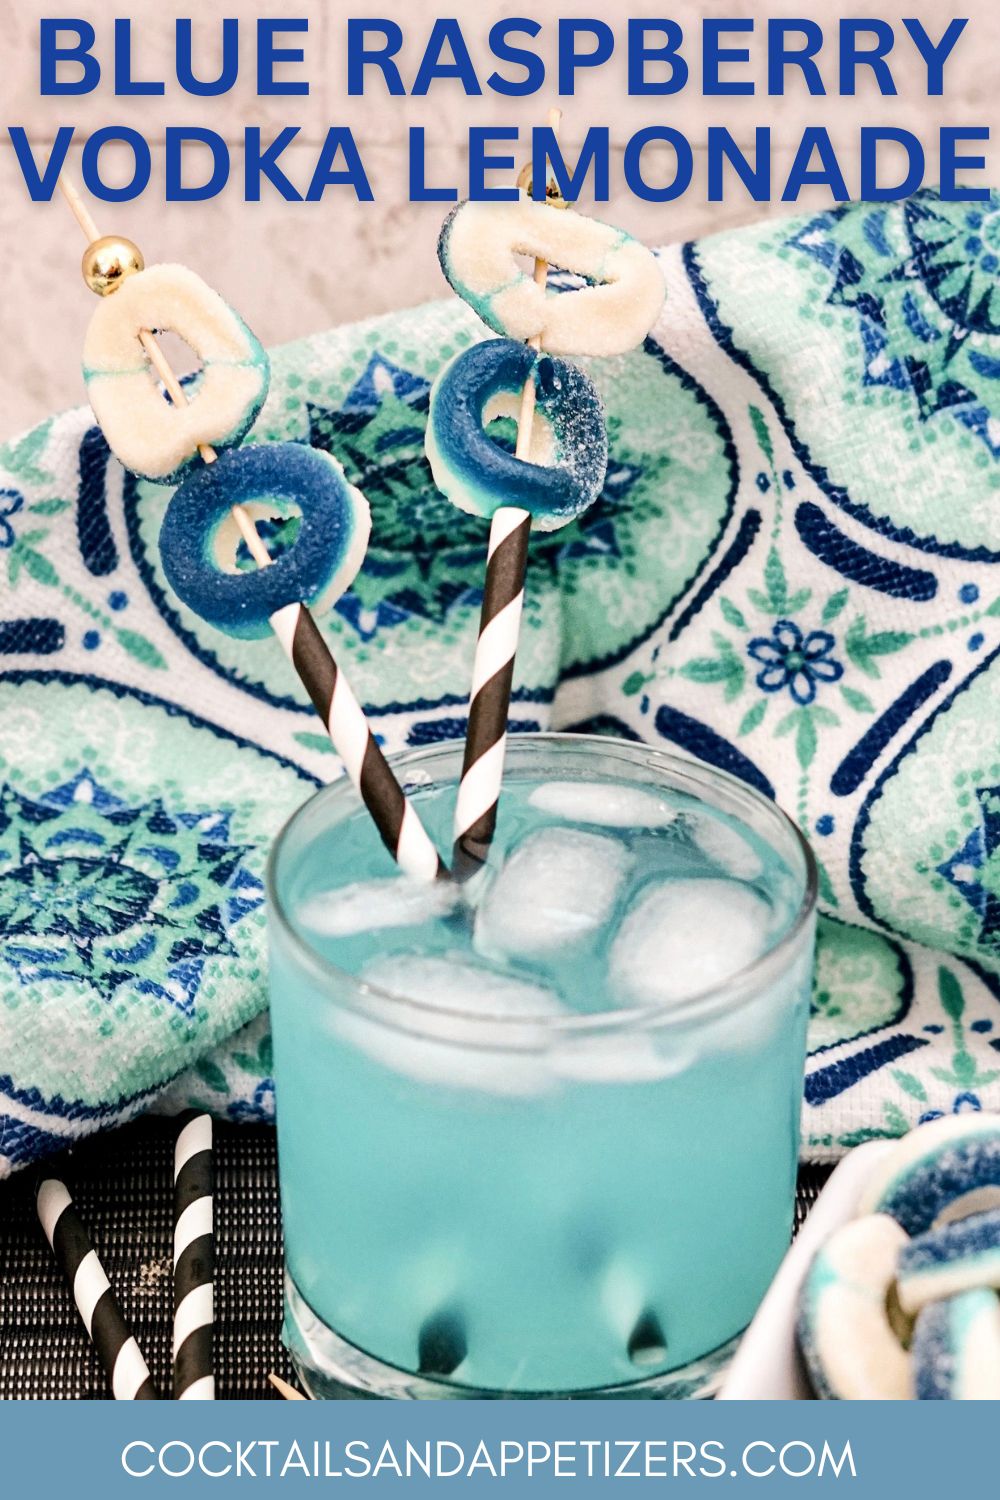 Blue Raspberry Lemonade Vodka drink with straws and gummy ring candy garnish.